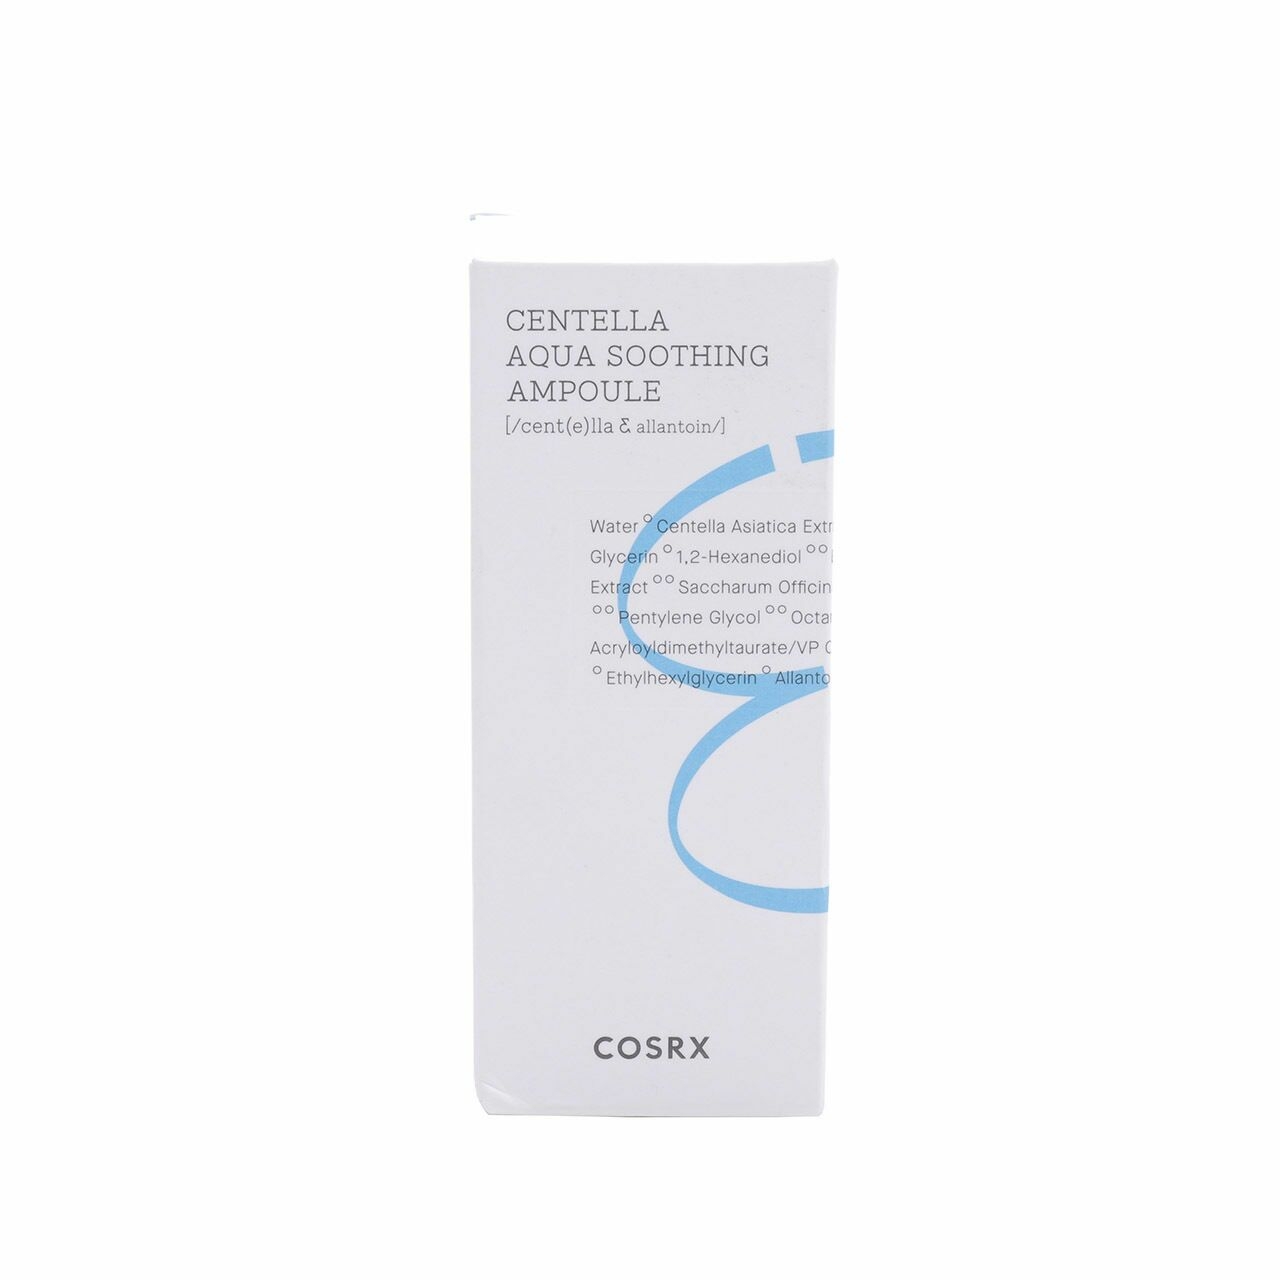 Cosrx Centela Aqua Soothing Ampoule Skin Care